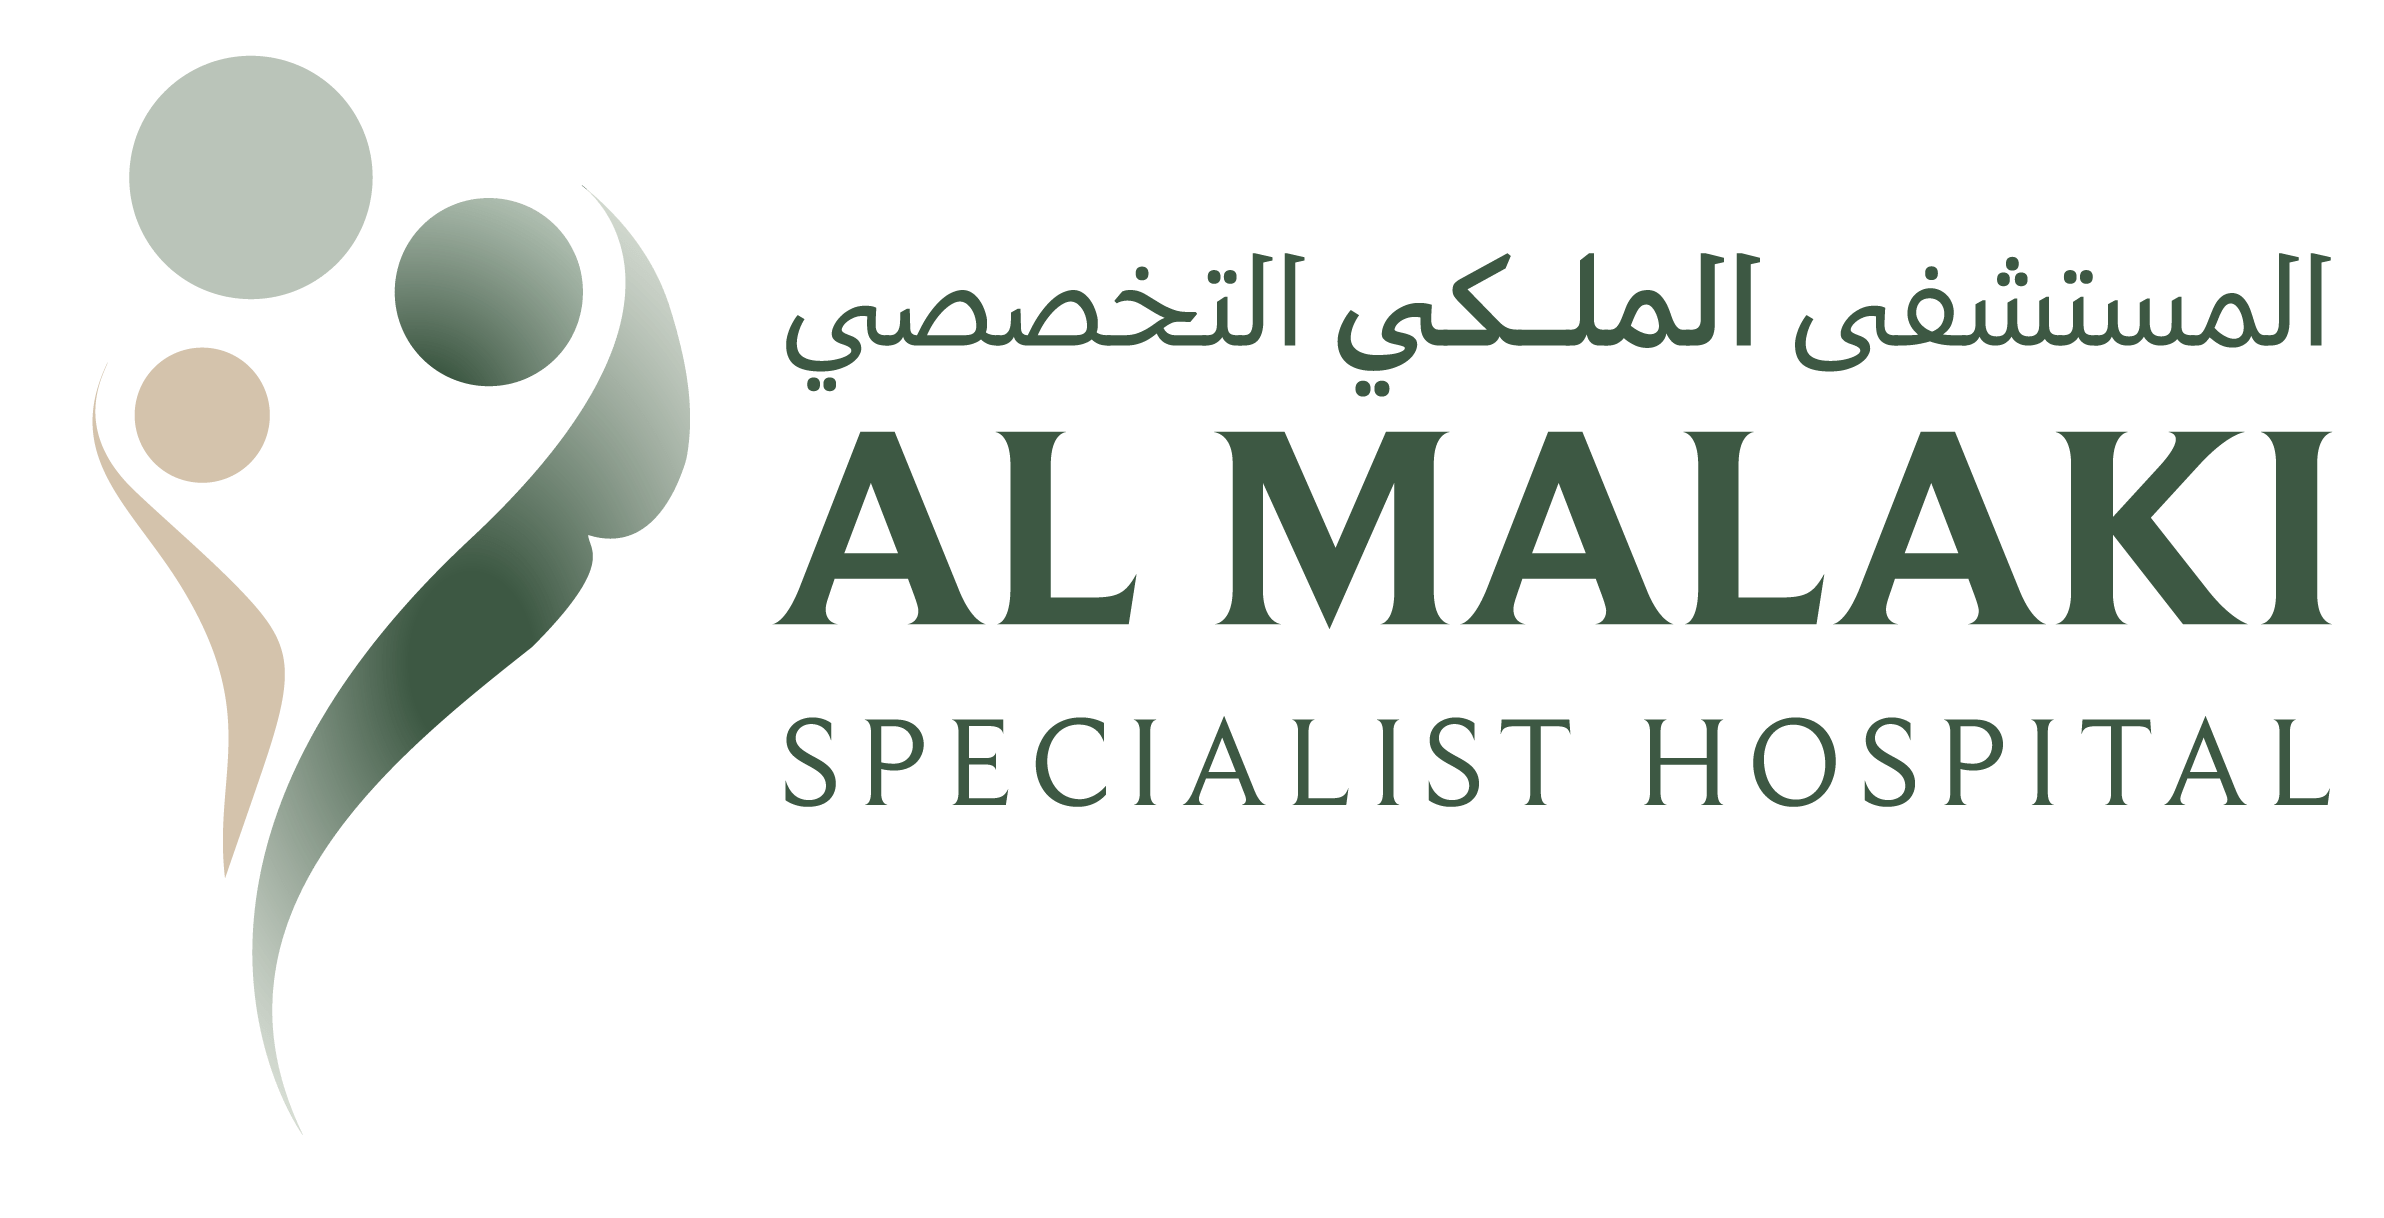 Al Malaki Specialist Hospital